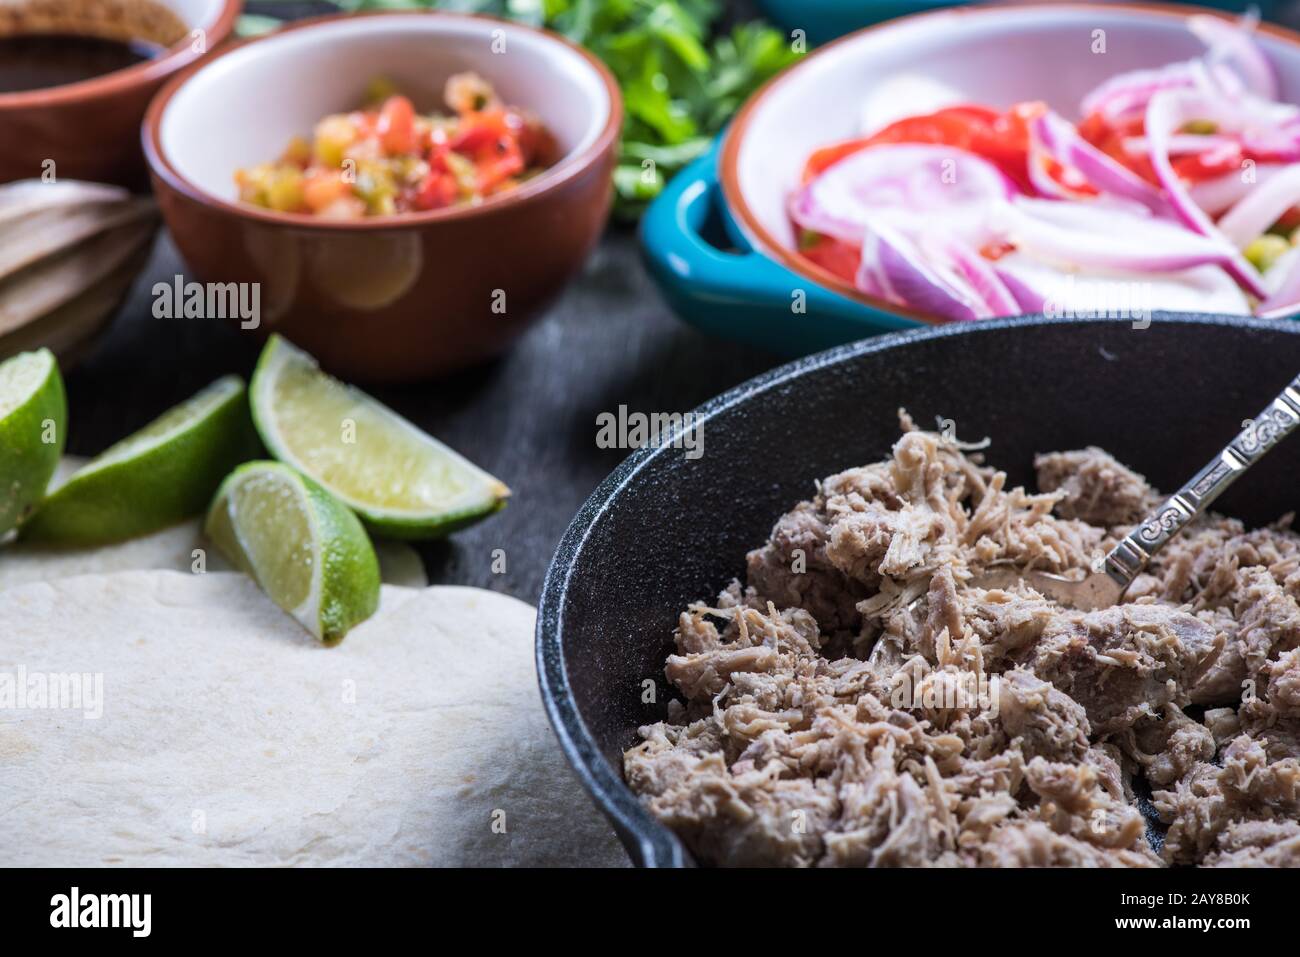 Preparation of classic street food burritos Stock Photo